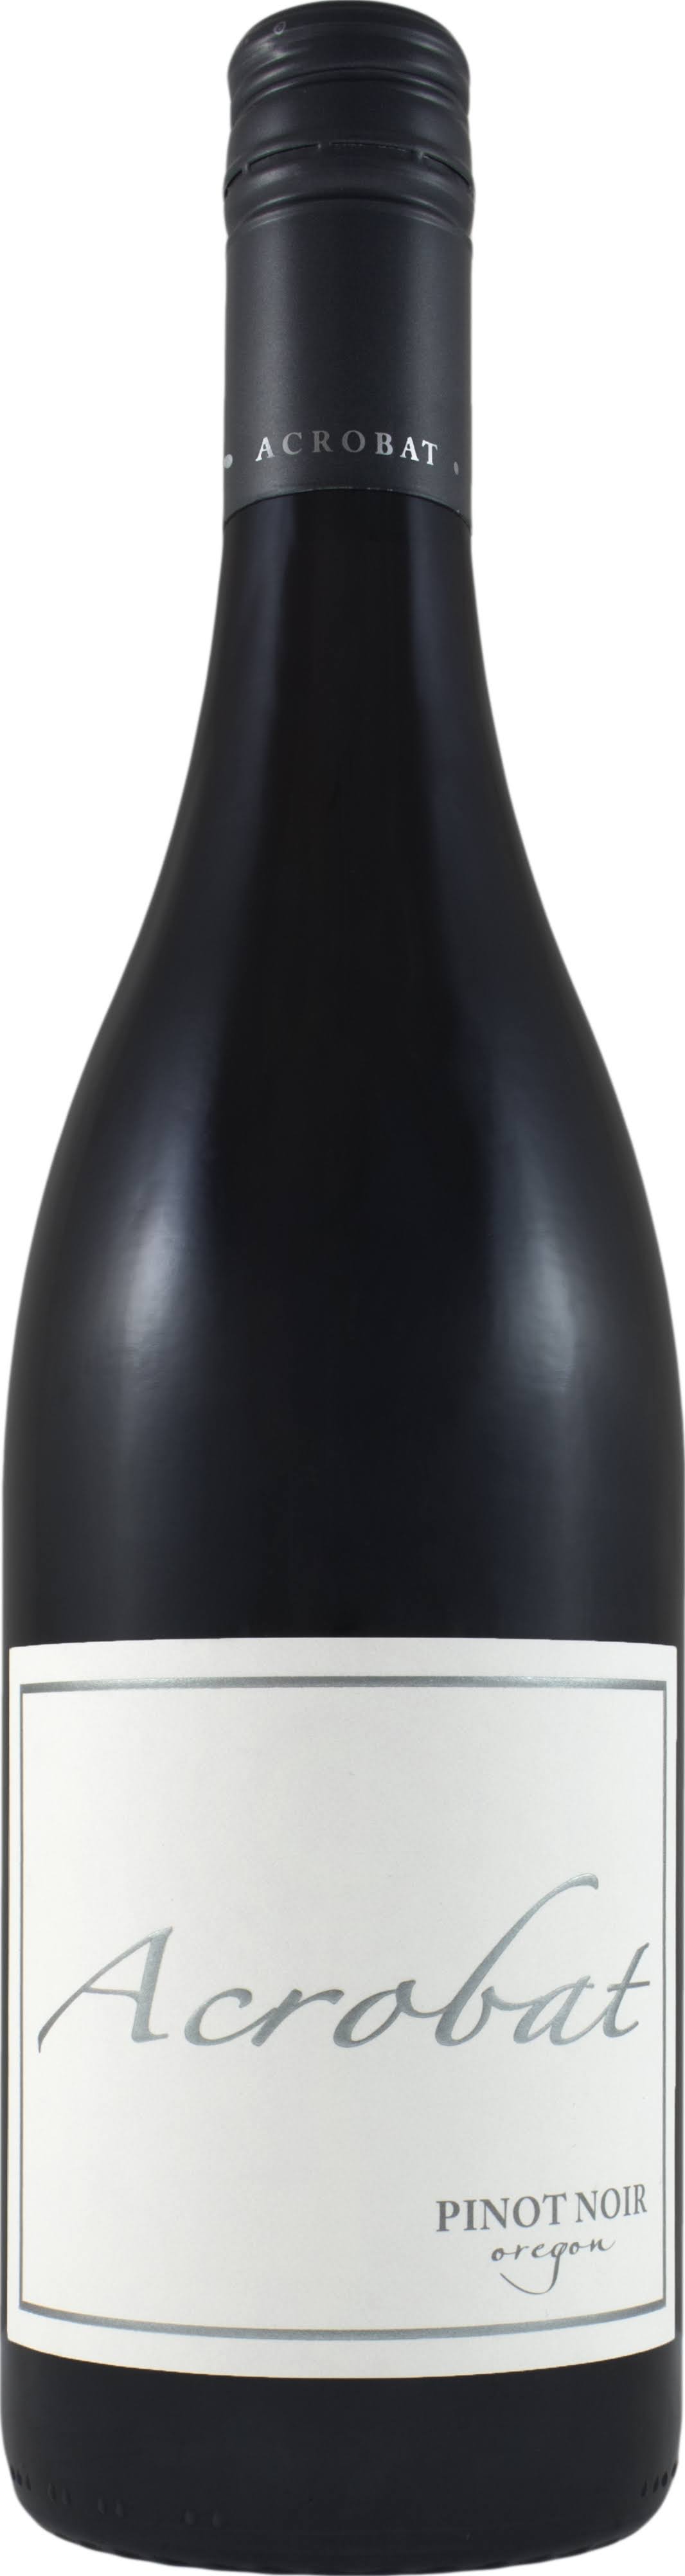 Acrobat Pinot Noir Oregon - Oregon, USA